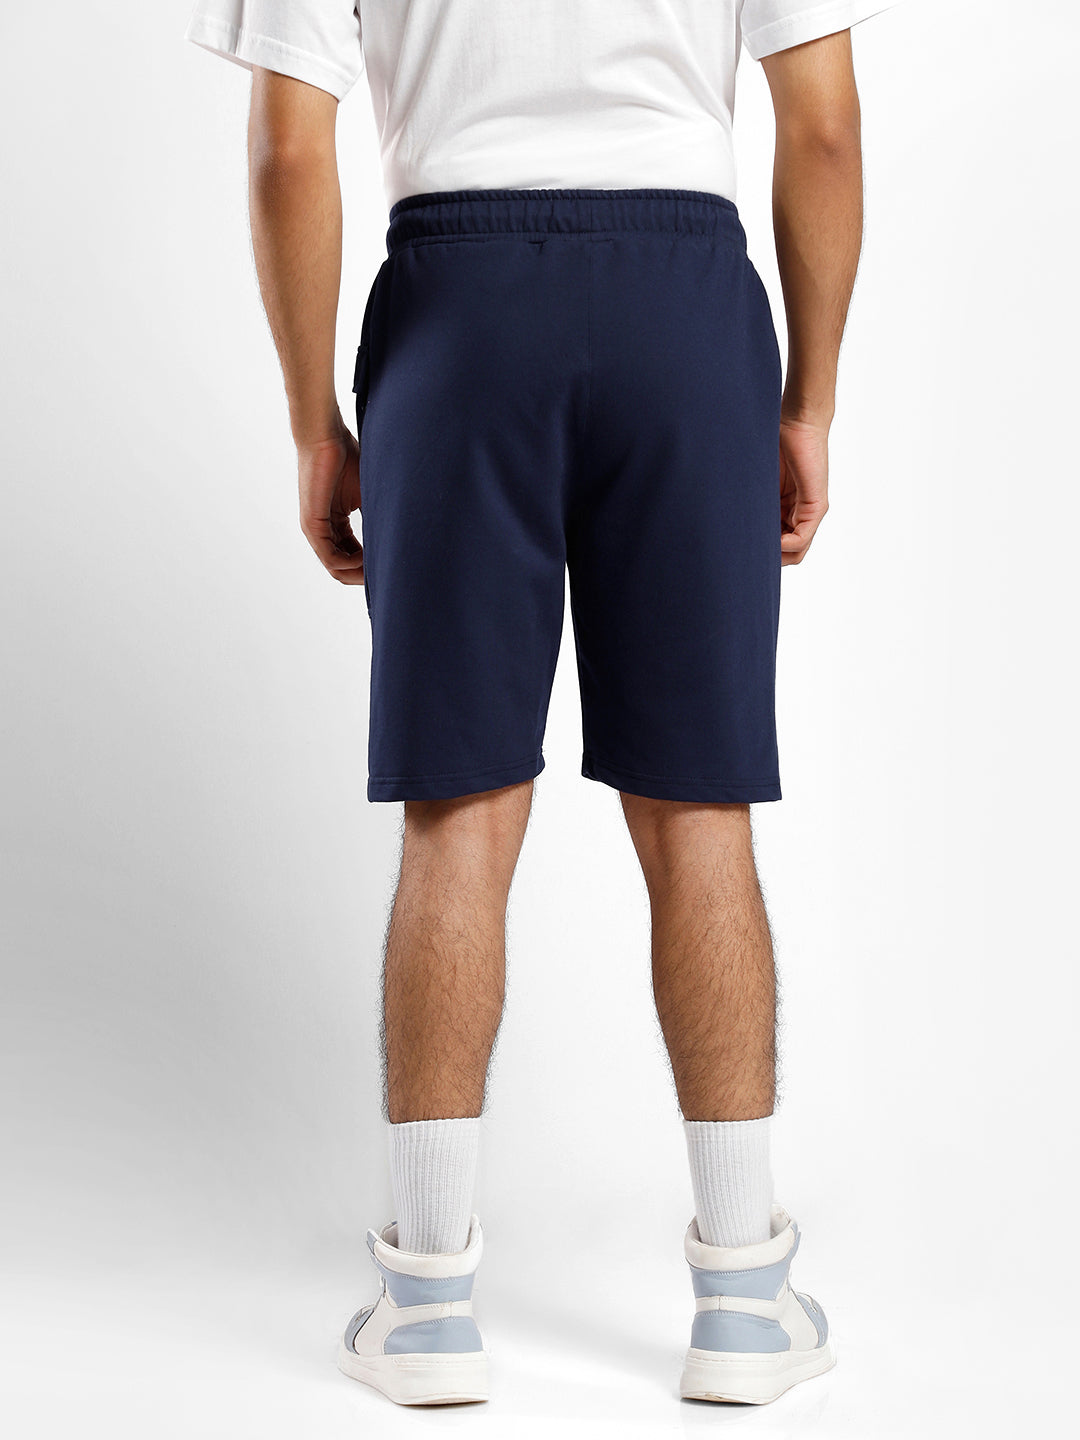 Grey Melange Hermes Utility Shorts